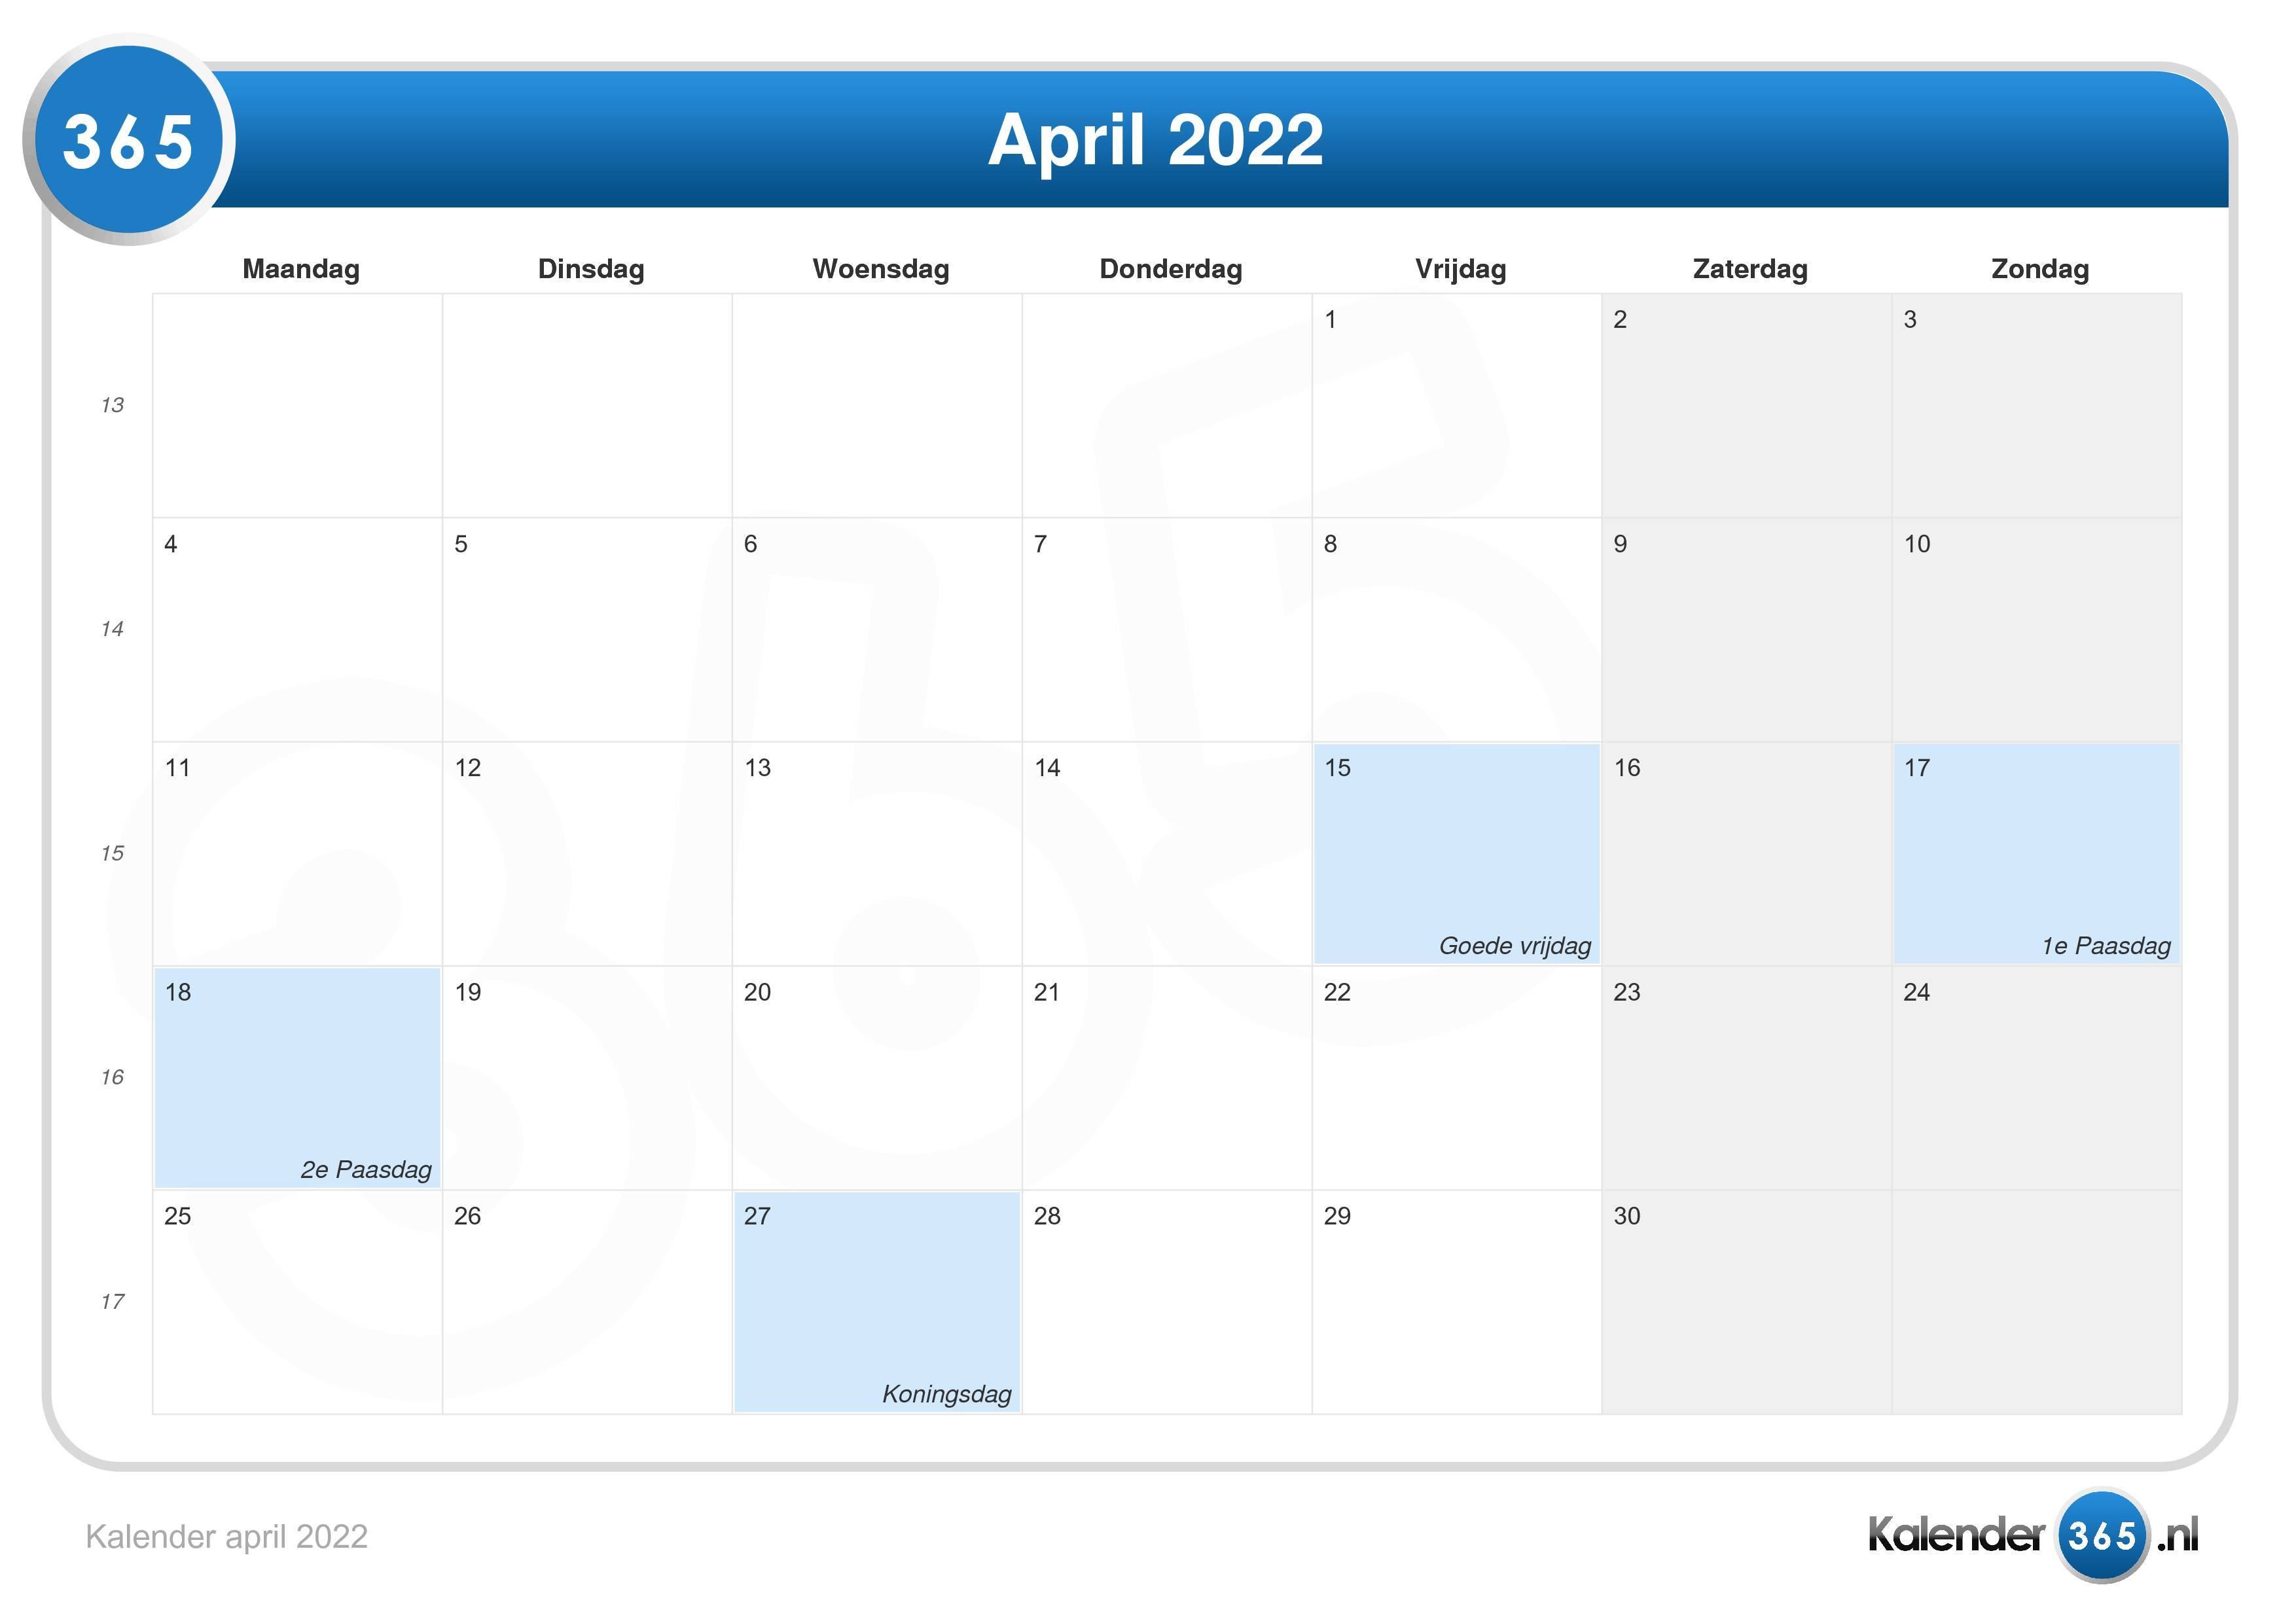 19 april 2022 public holiday